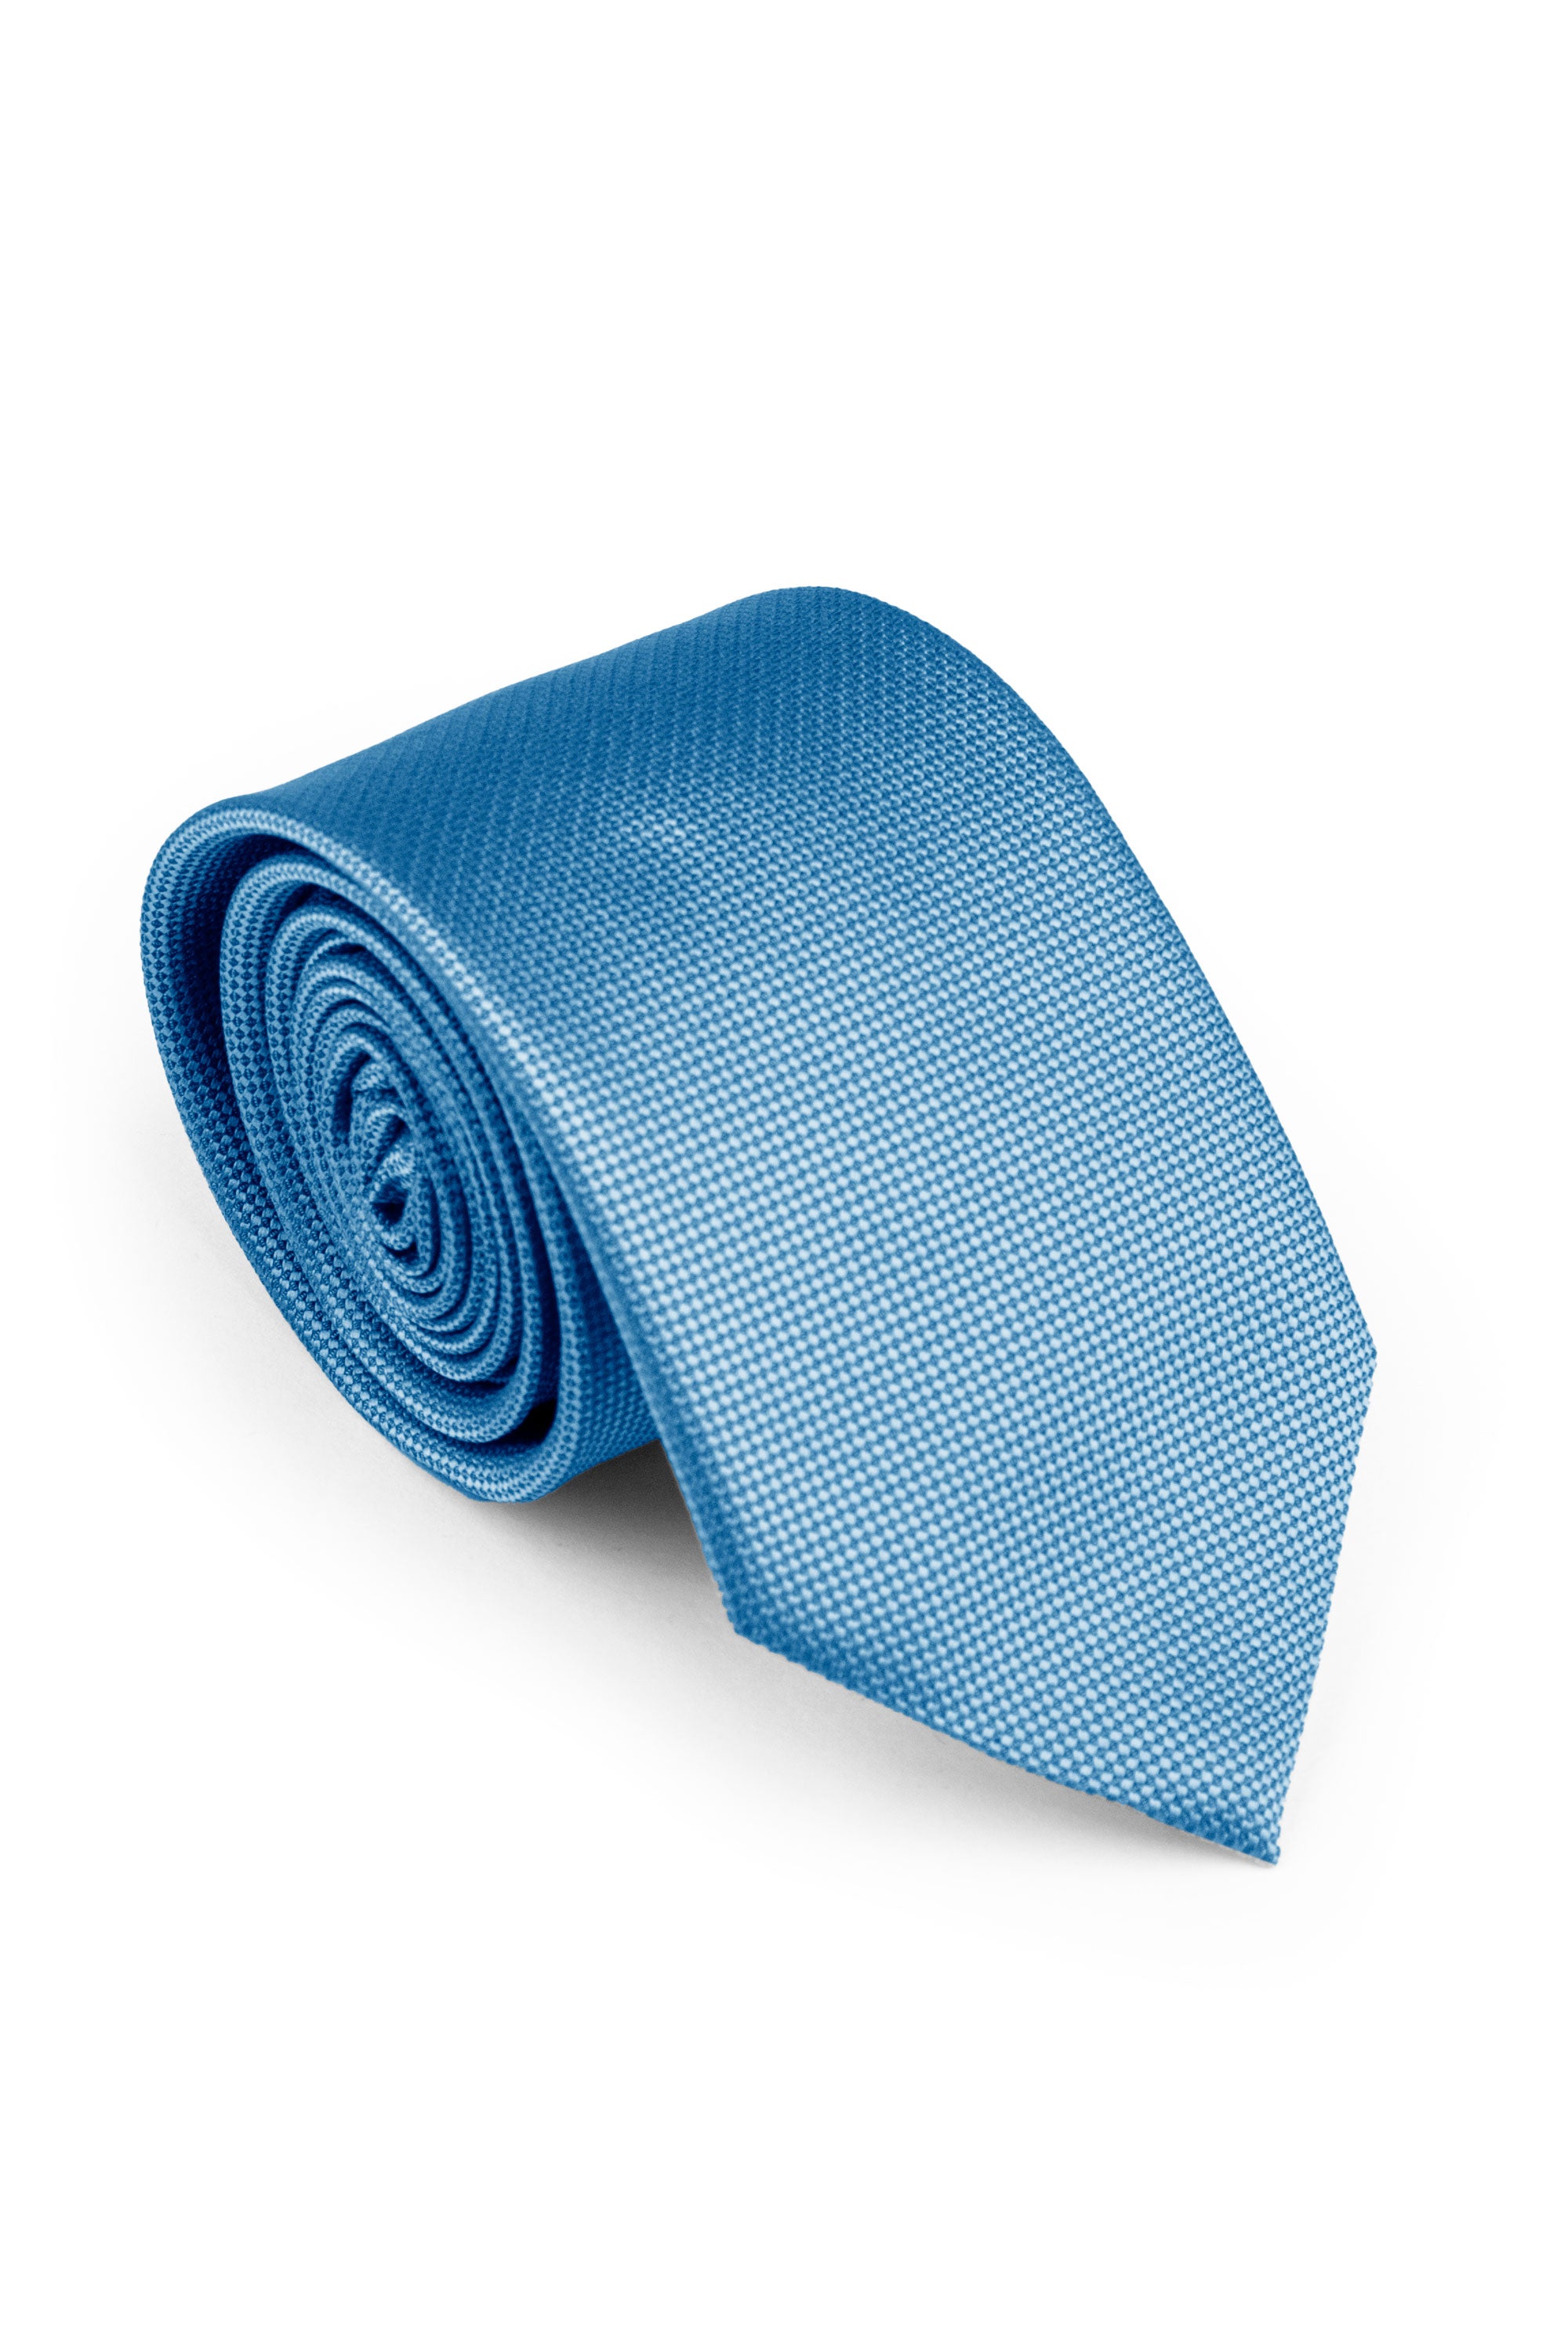 Plain Turquoise Tie Loose